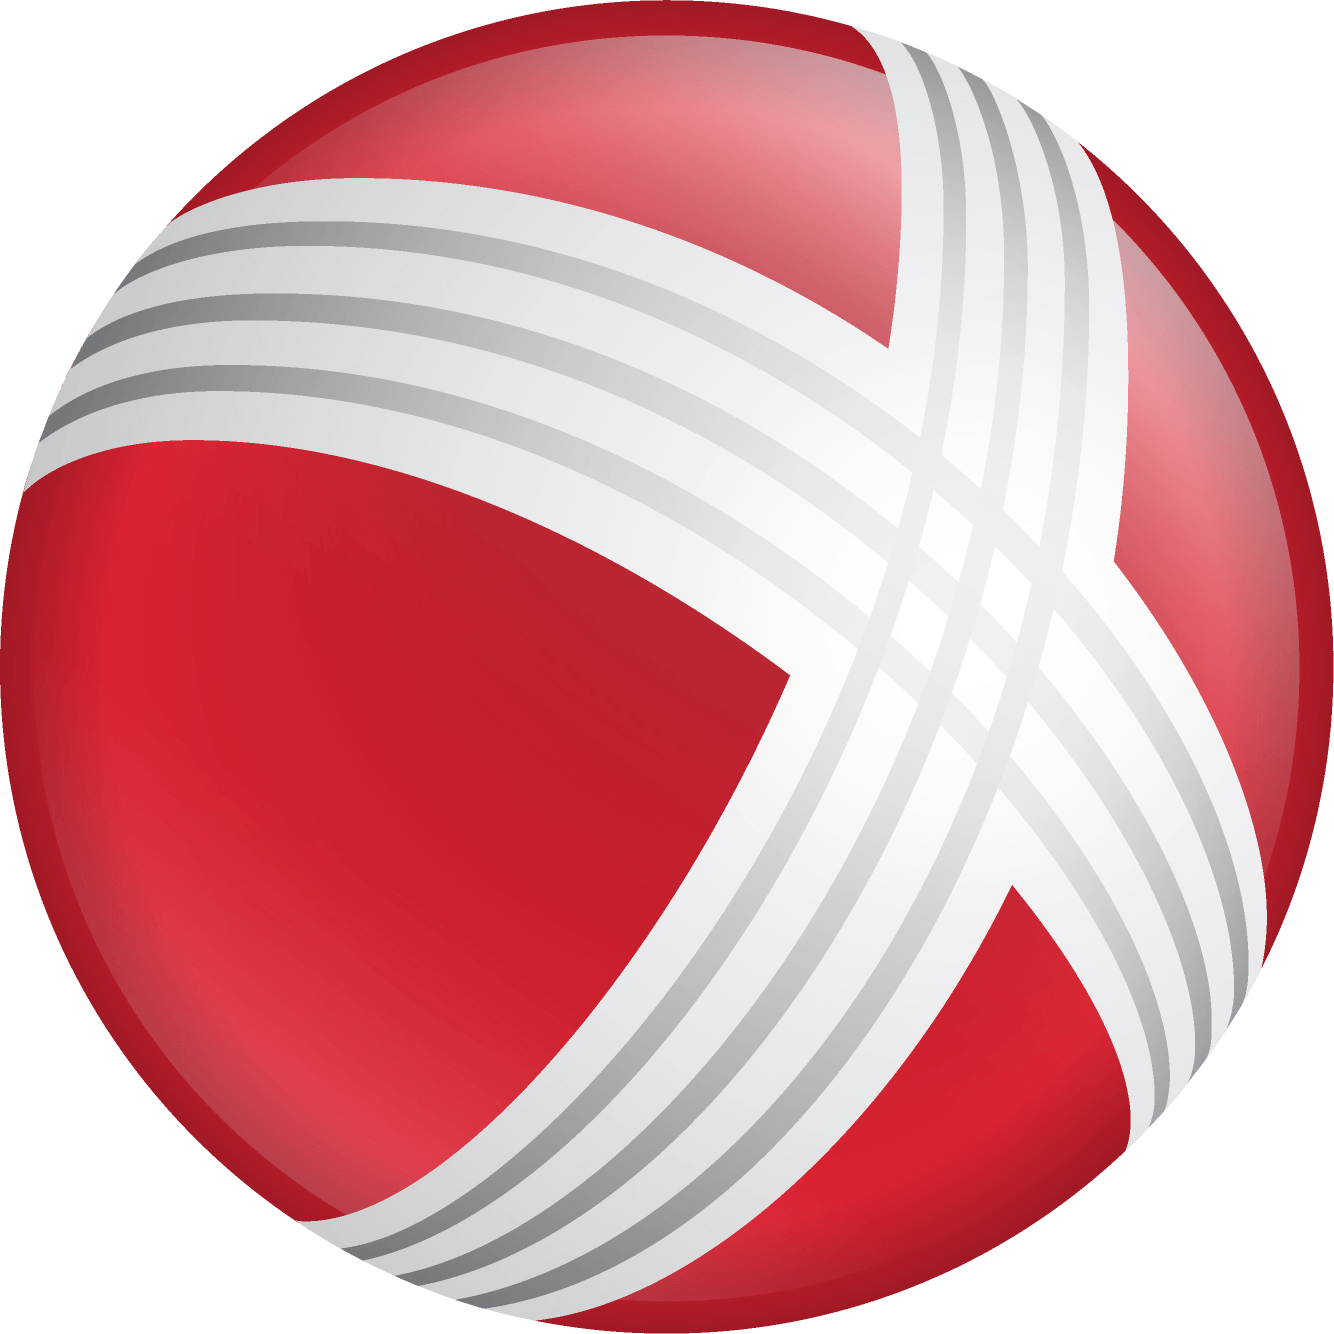 Red White Cross Logo - Image - Xerox orb.png | Logopedia | FANDOM powered by Wikia